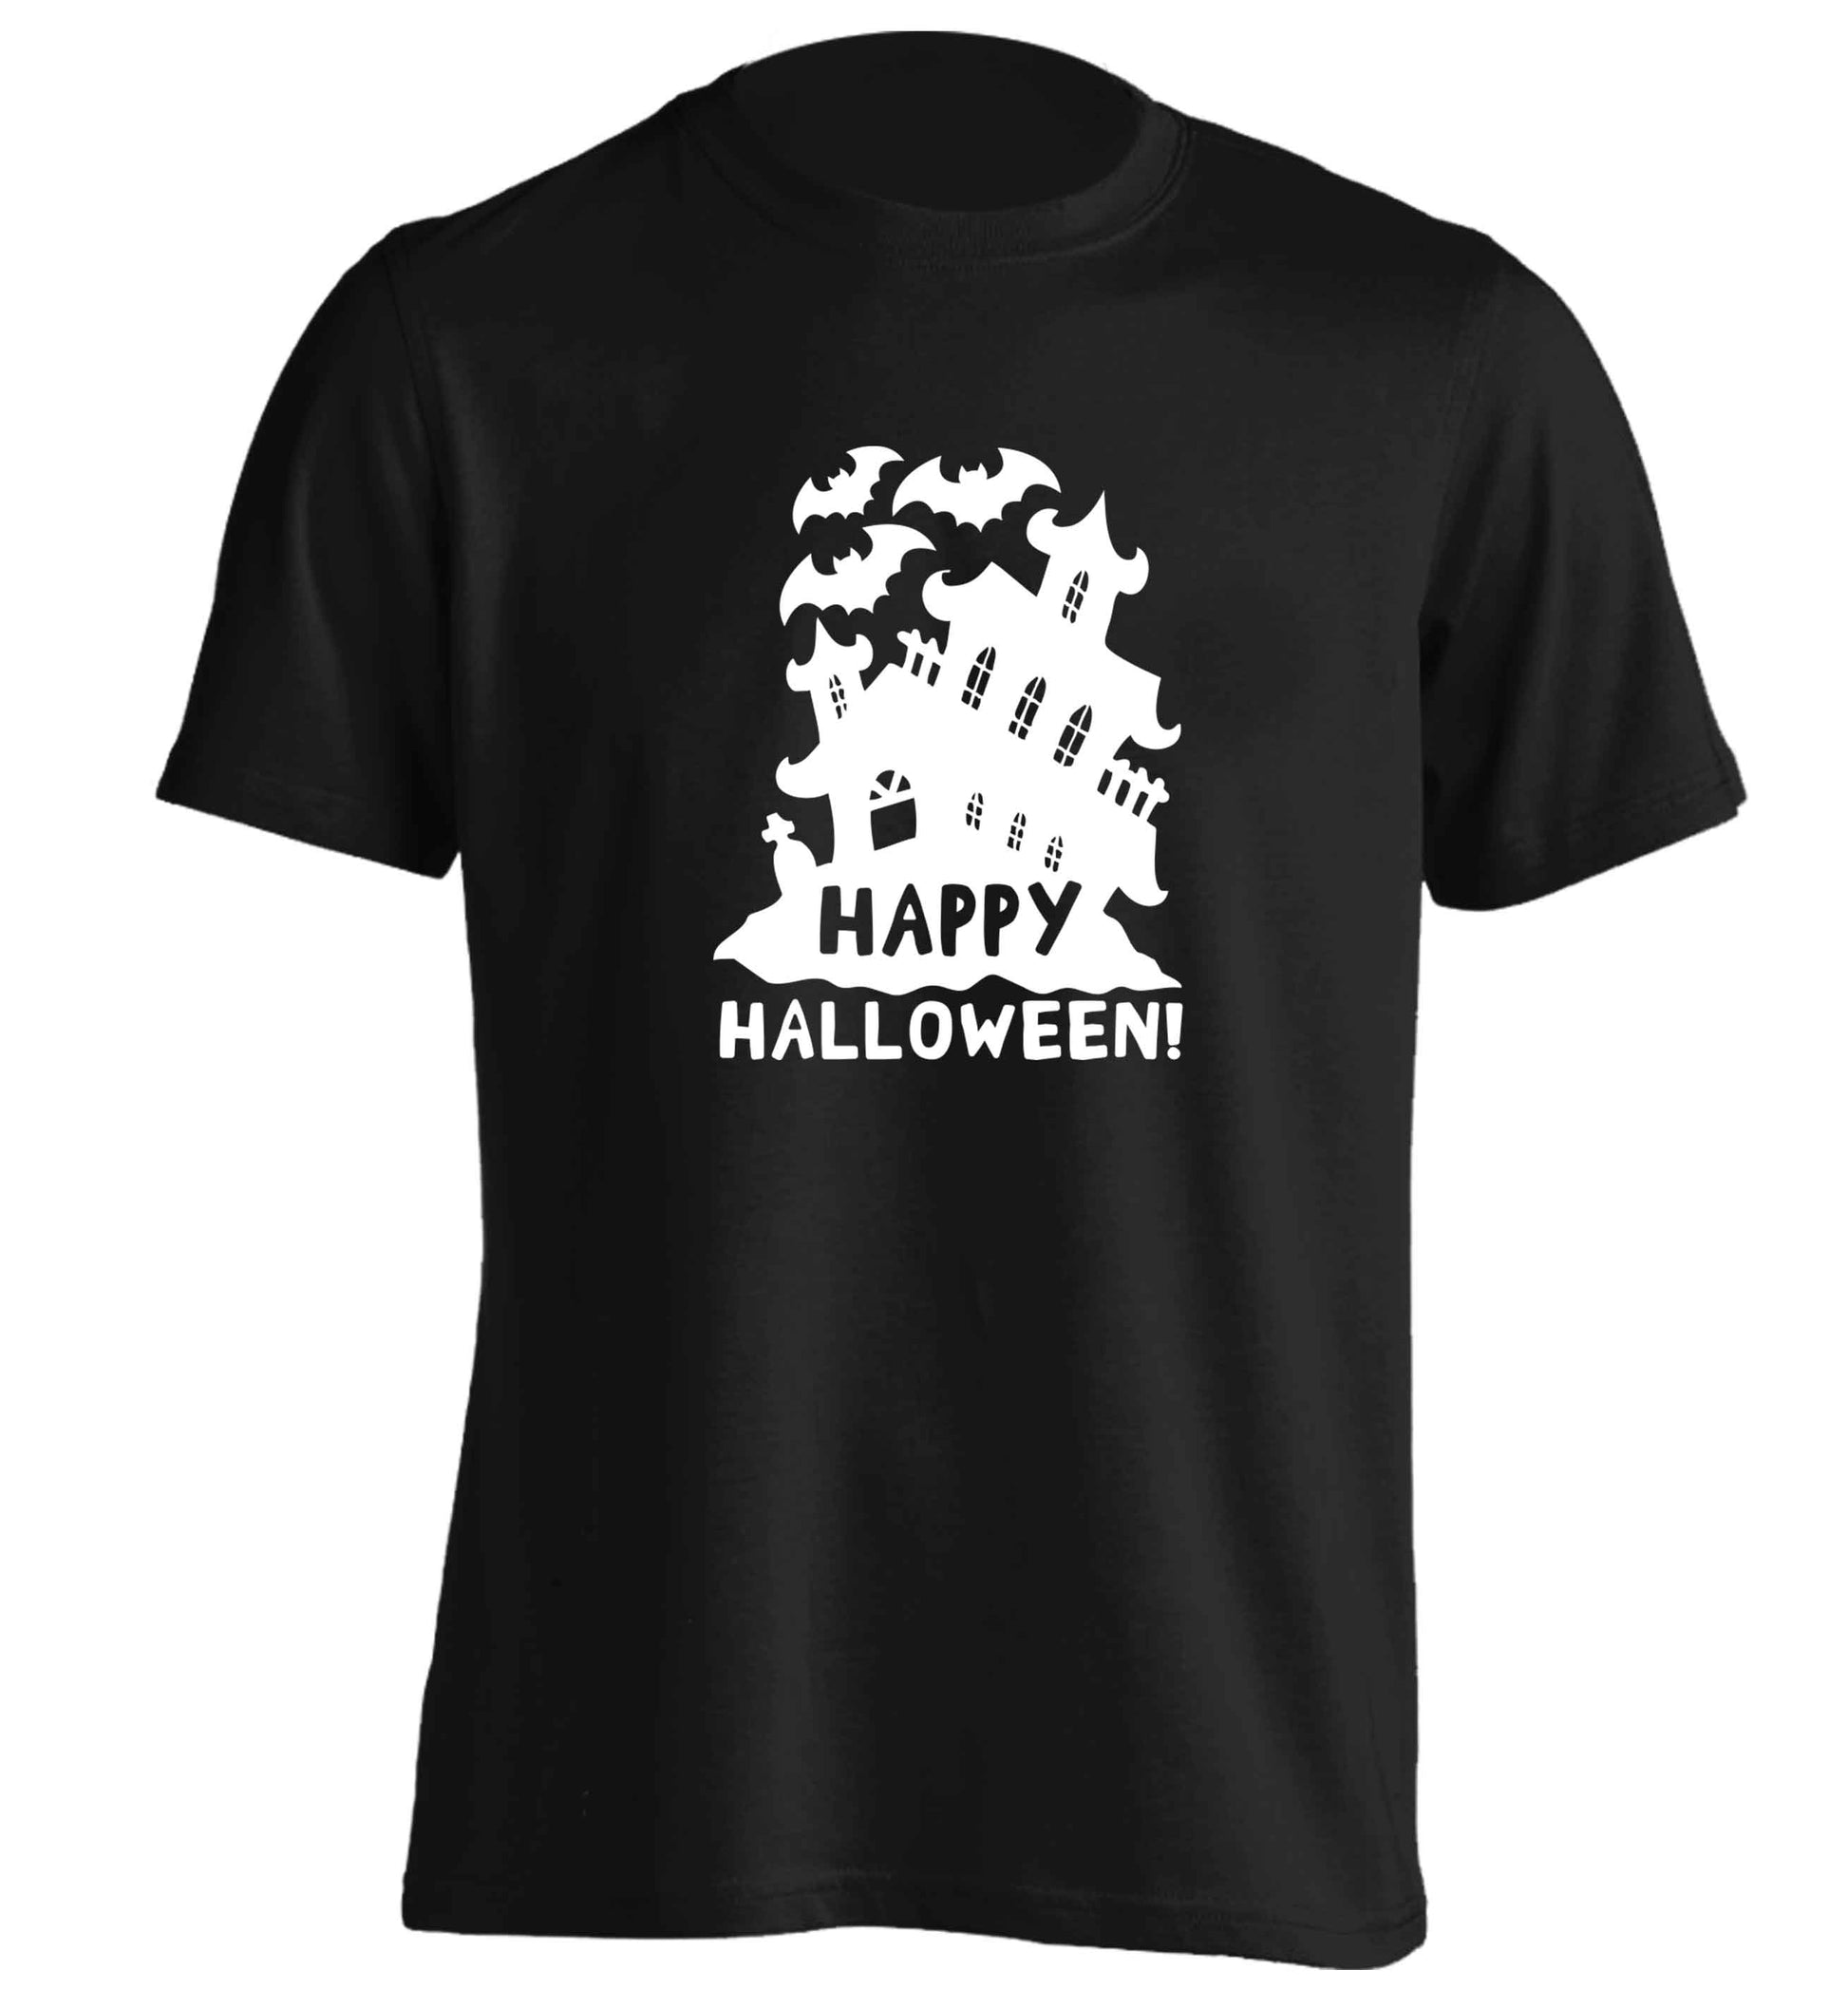 Happy halloween - haunted house adults unisex black Tshirt 2XL